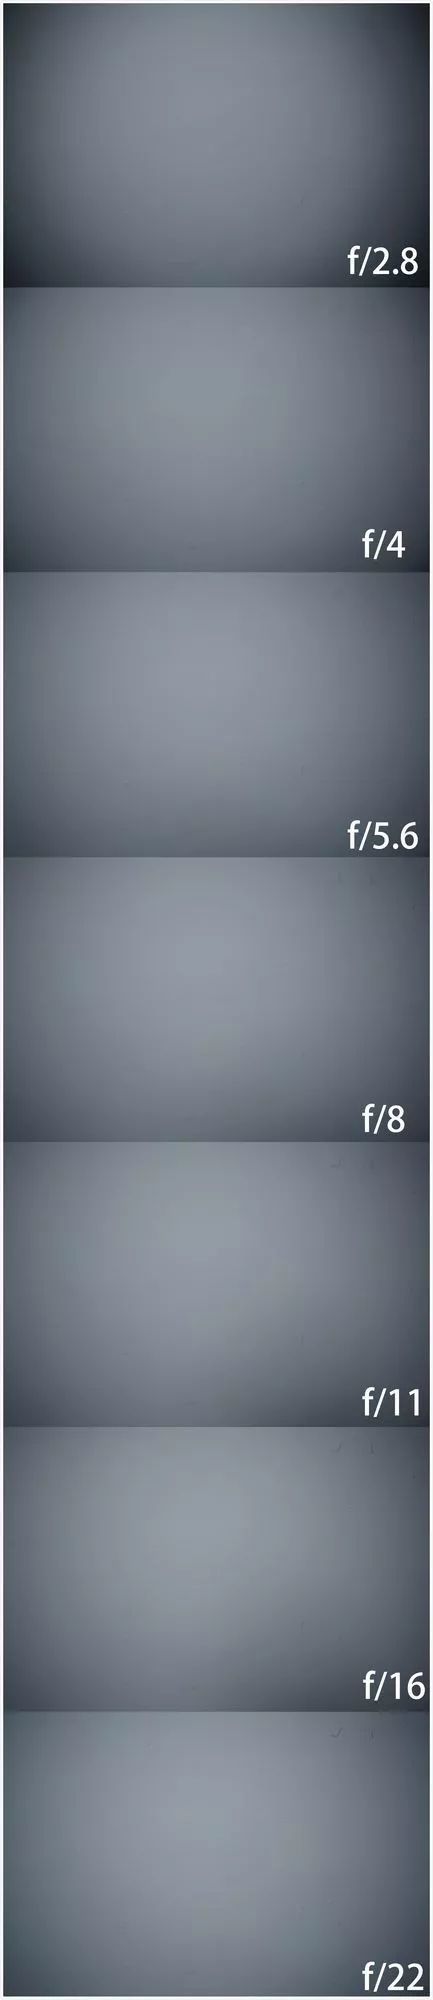 E口广角新星——腾龙17-28mm f/2.8 Di III RXD(A046)评测